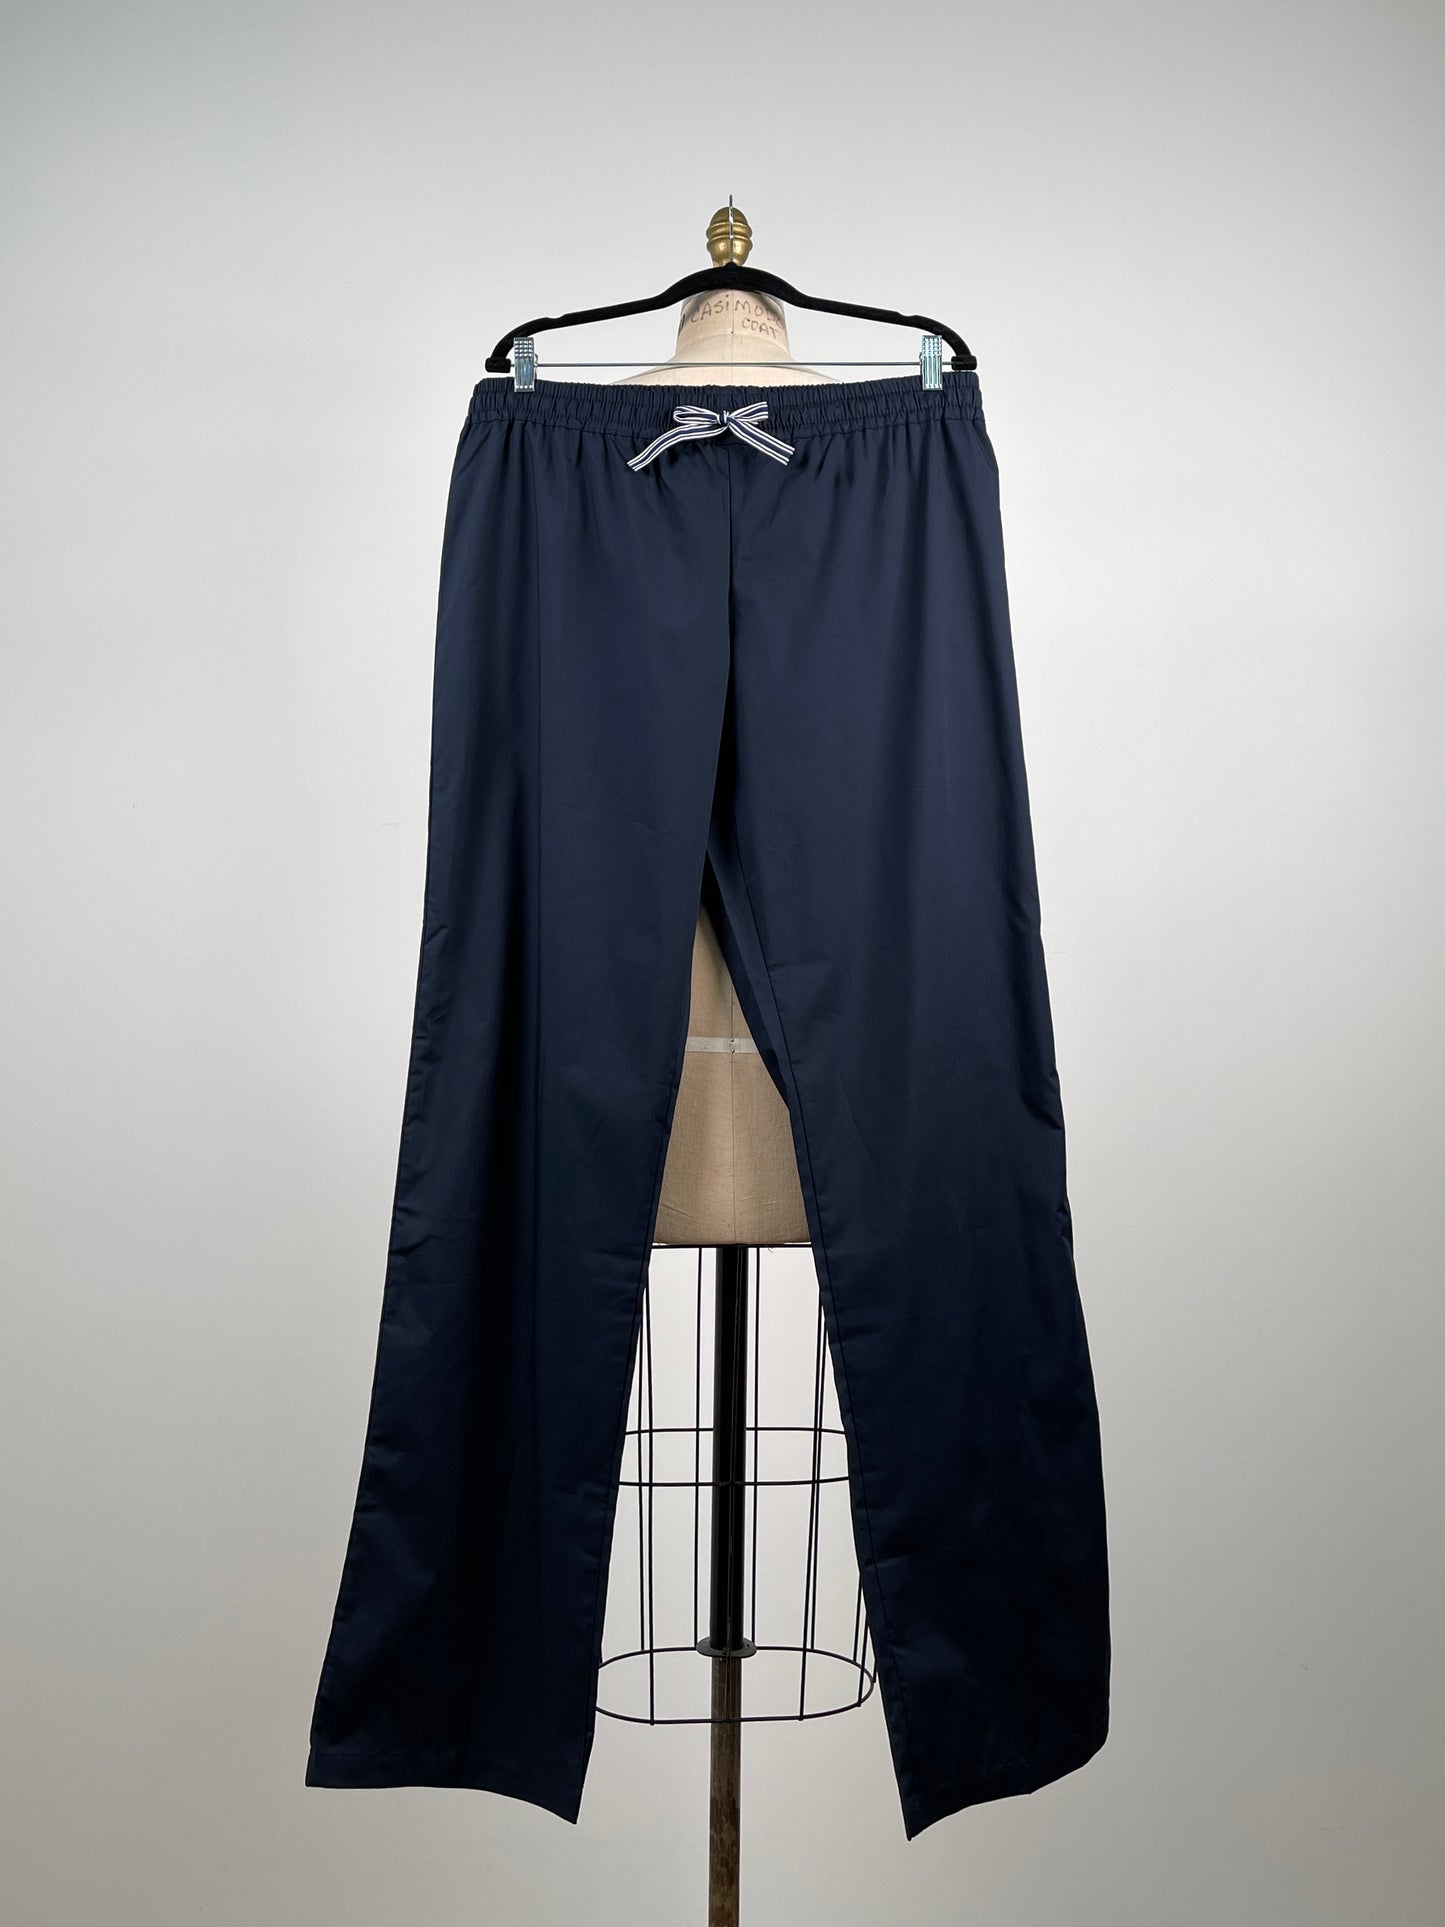 Pantalon pyjamas marine à taille ajustable (L)